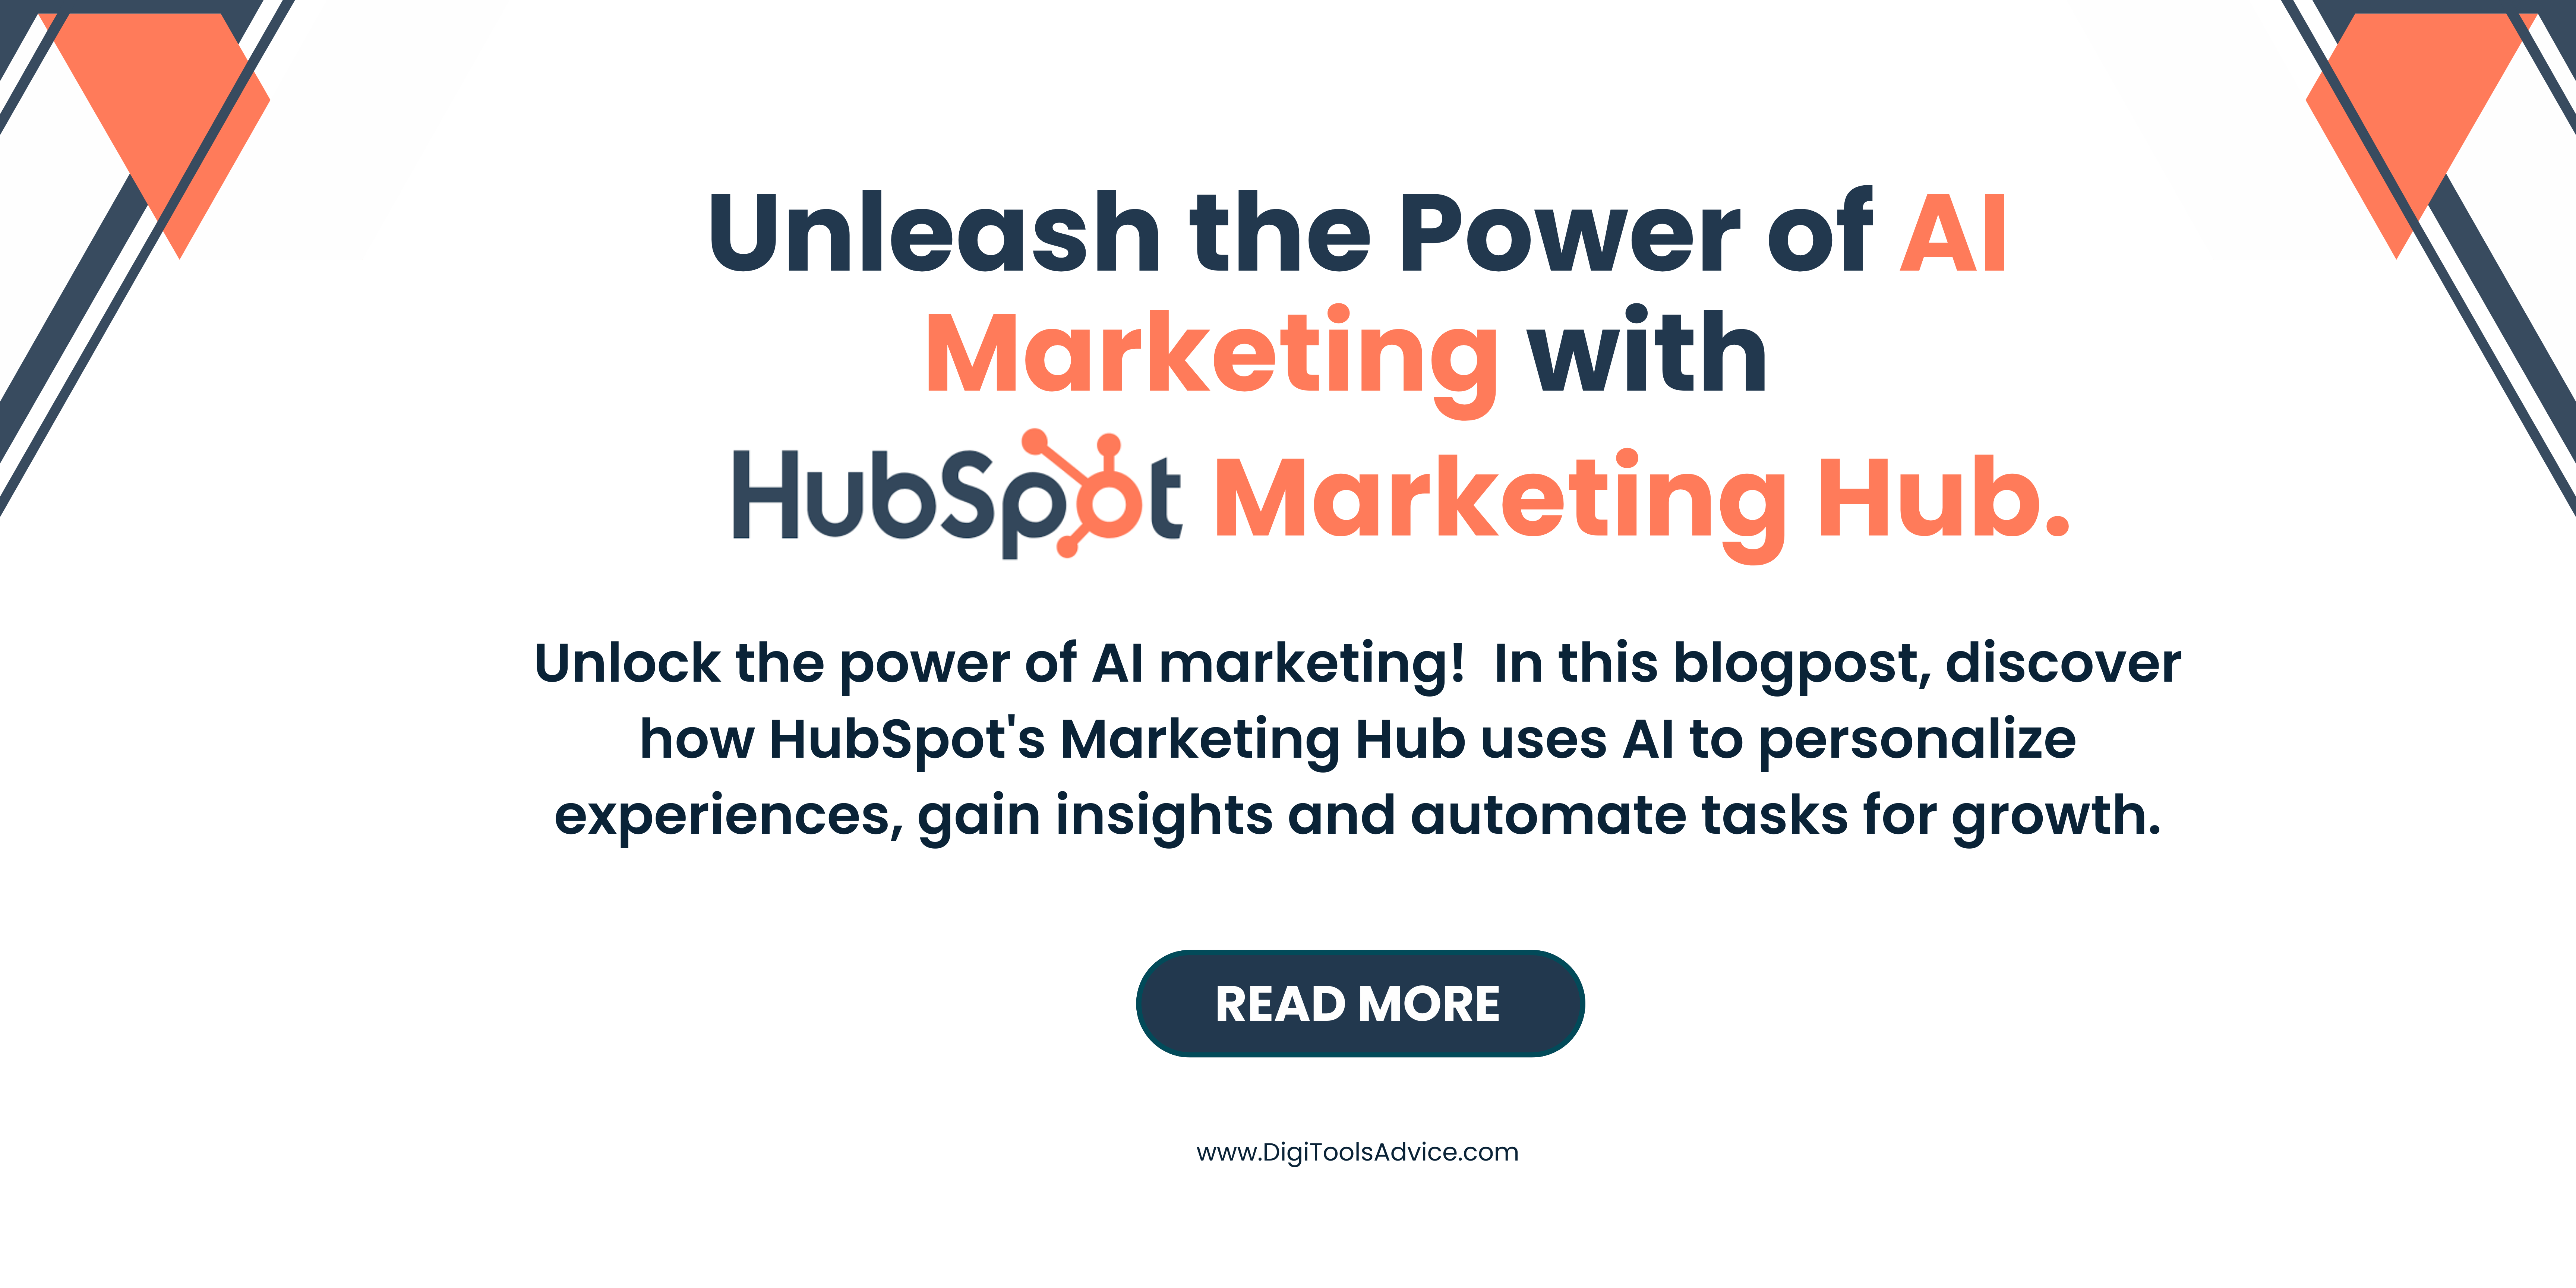 Unleash the Power of AI Marketing with HubSpot's Marketing Hub.